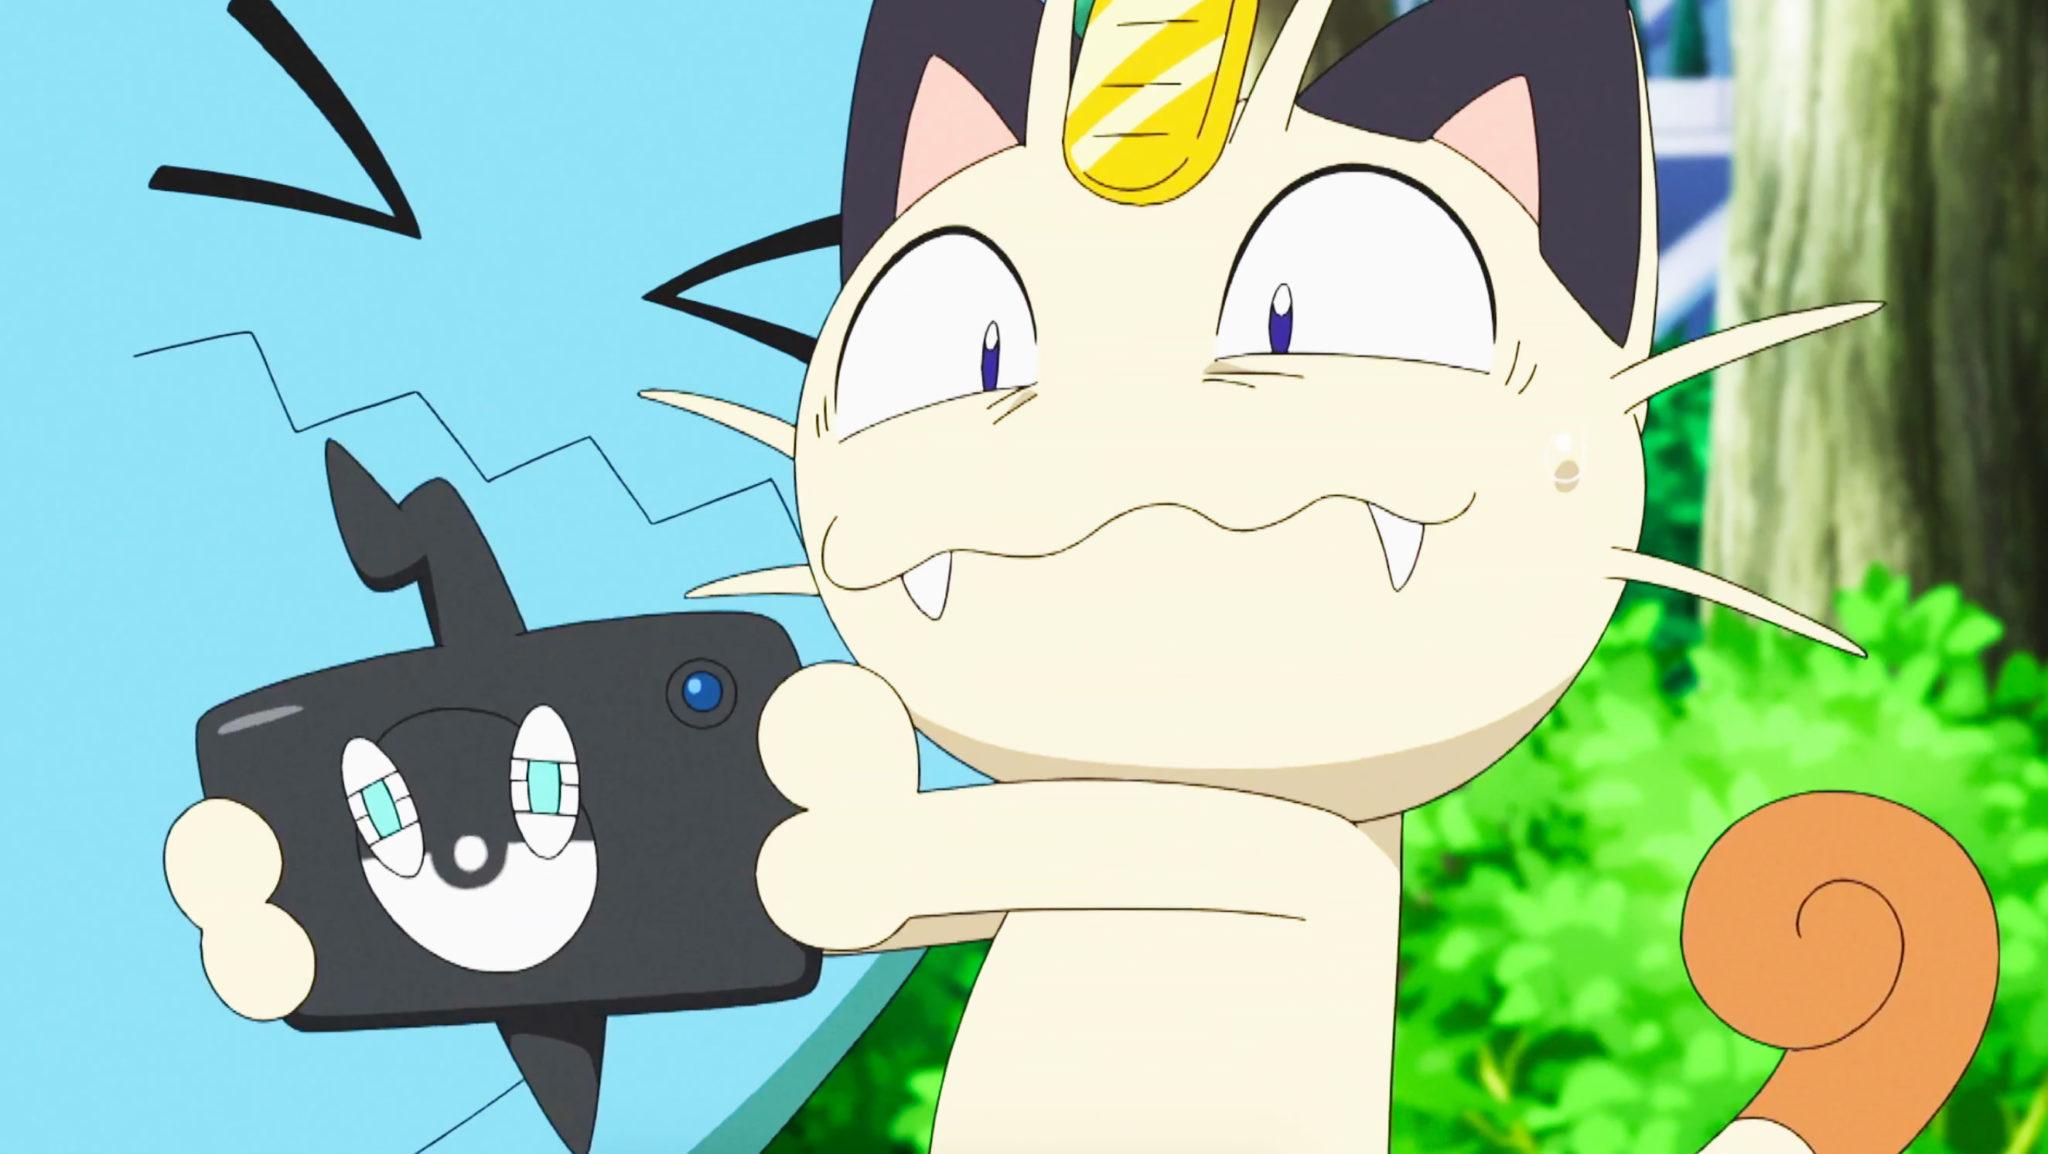 meowth holding rotom phone in pokemon anime